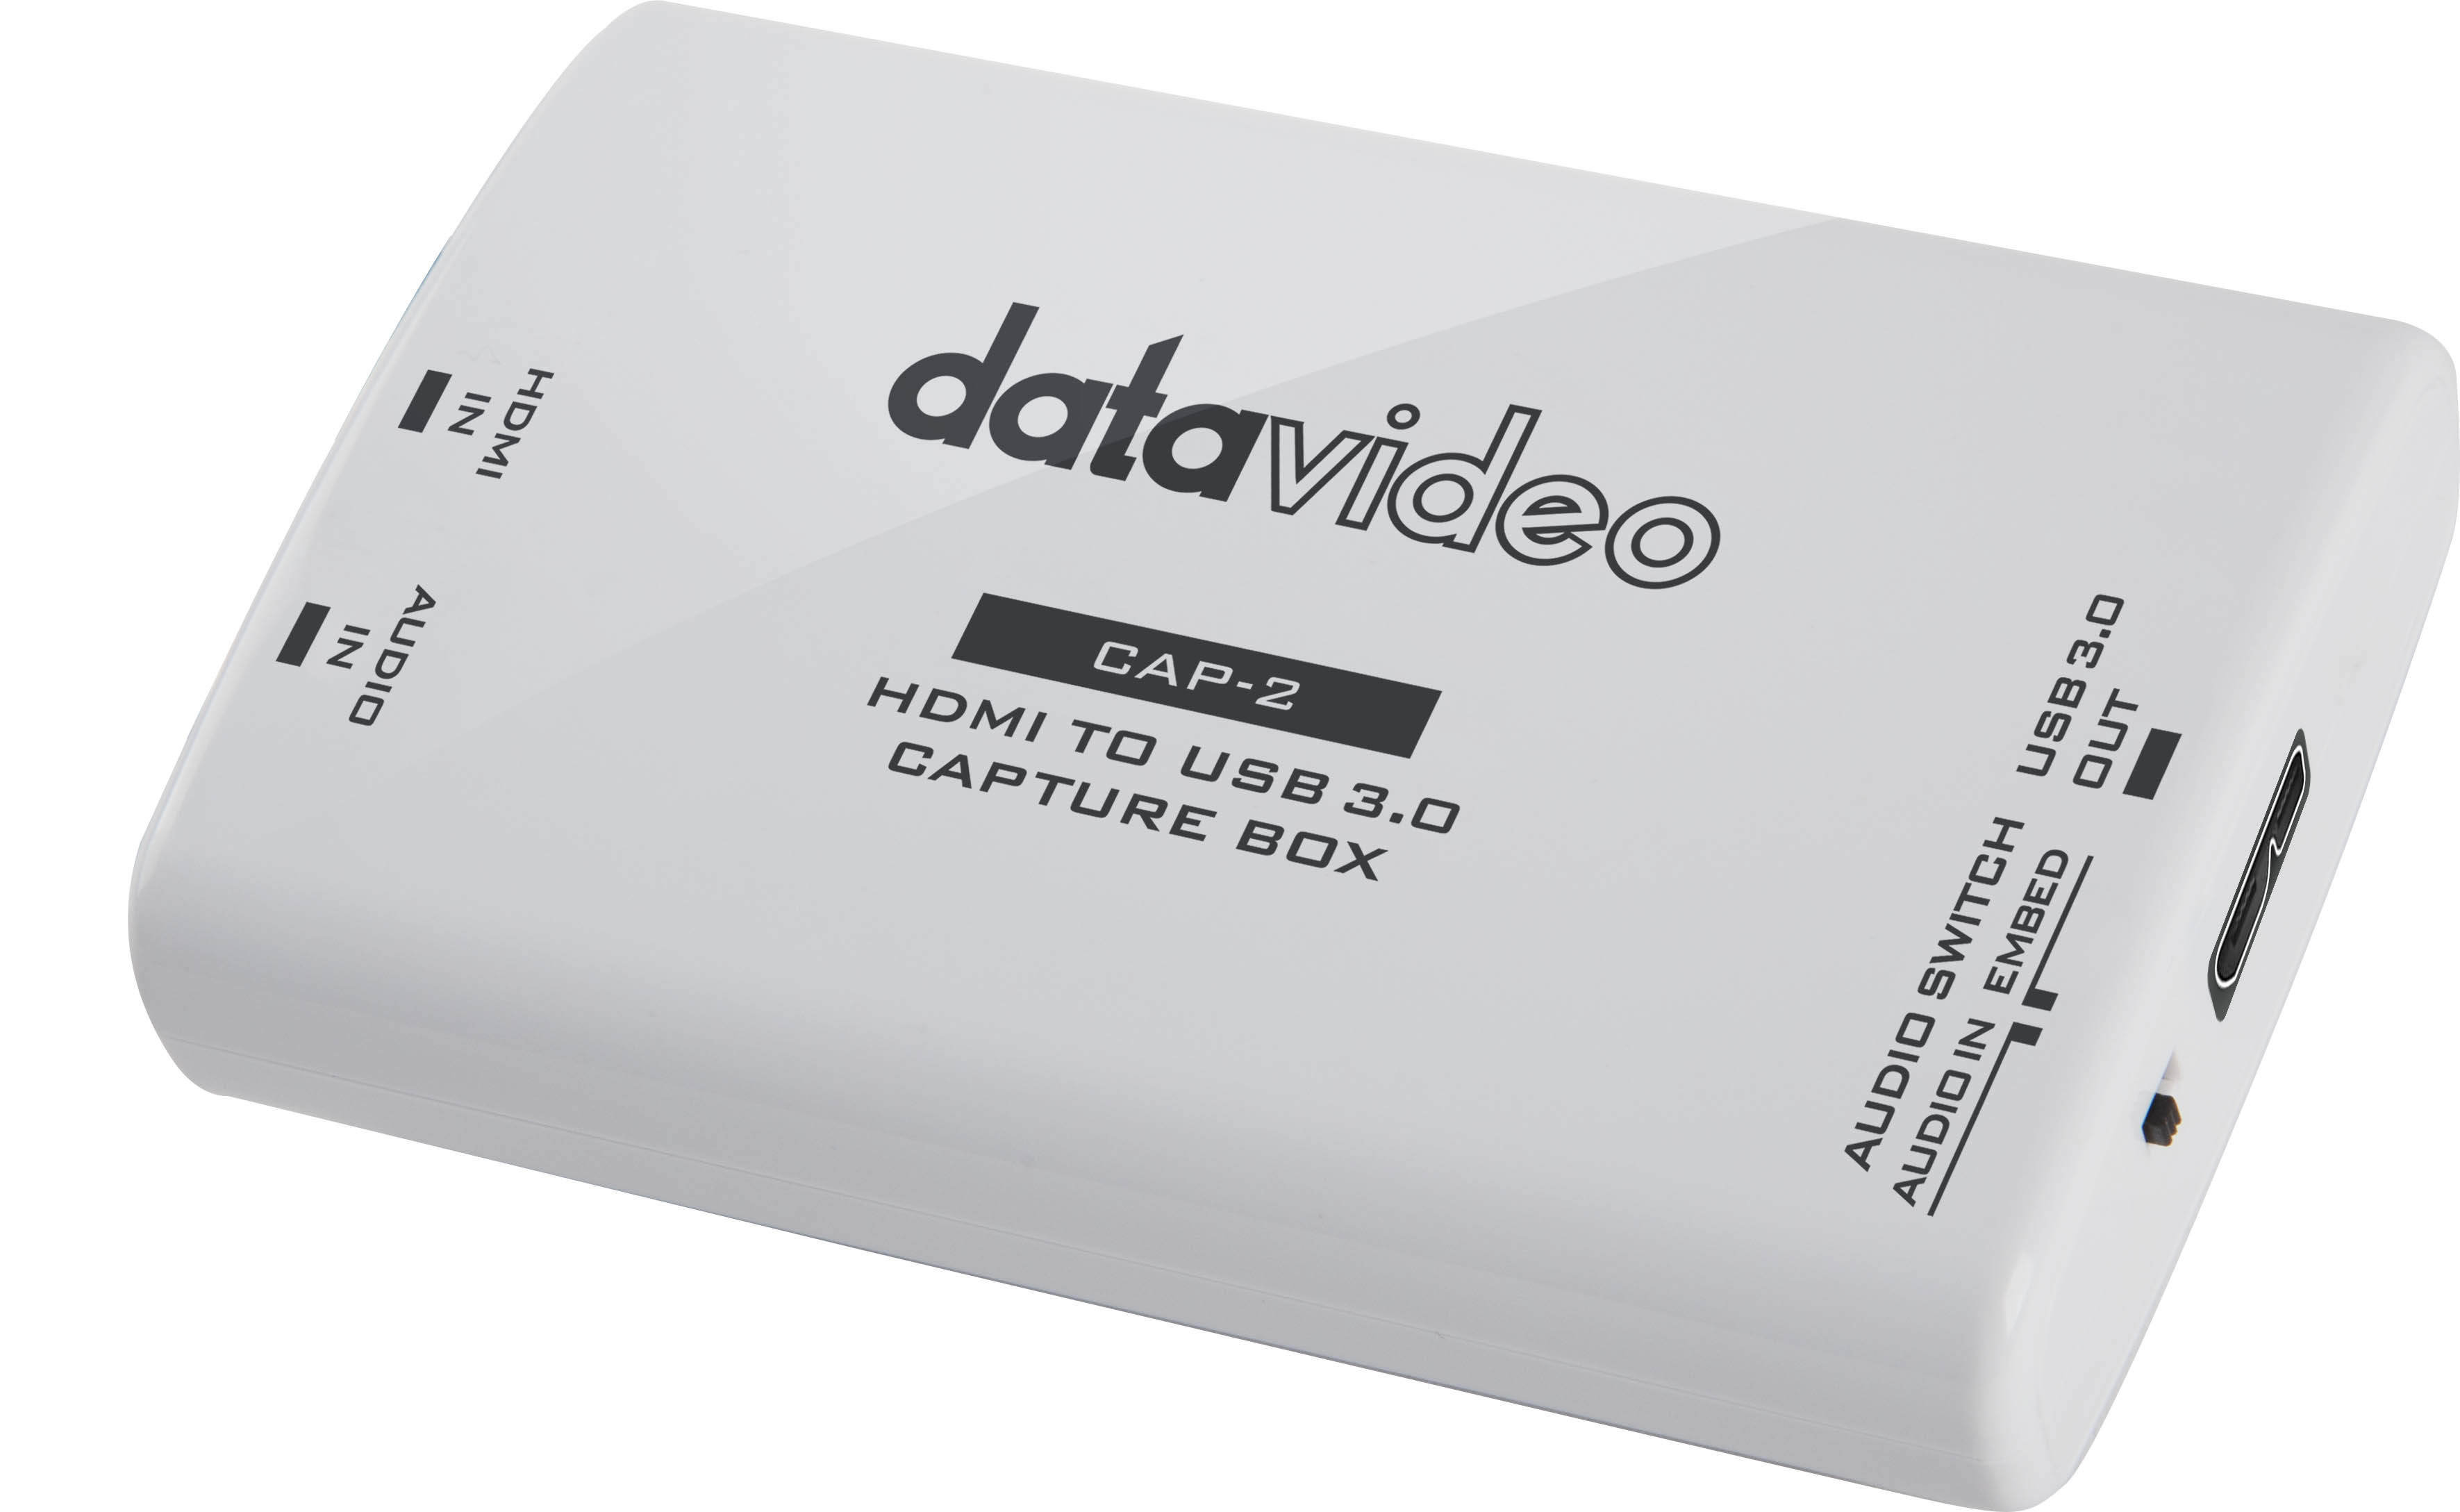 DATAVIDEO CAP-2 - HDMI to USB 3.0 Capture Box